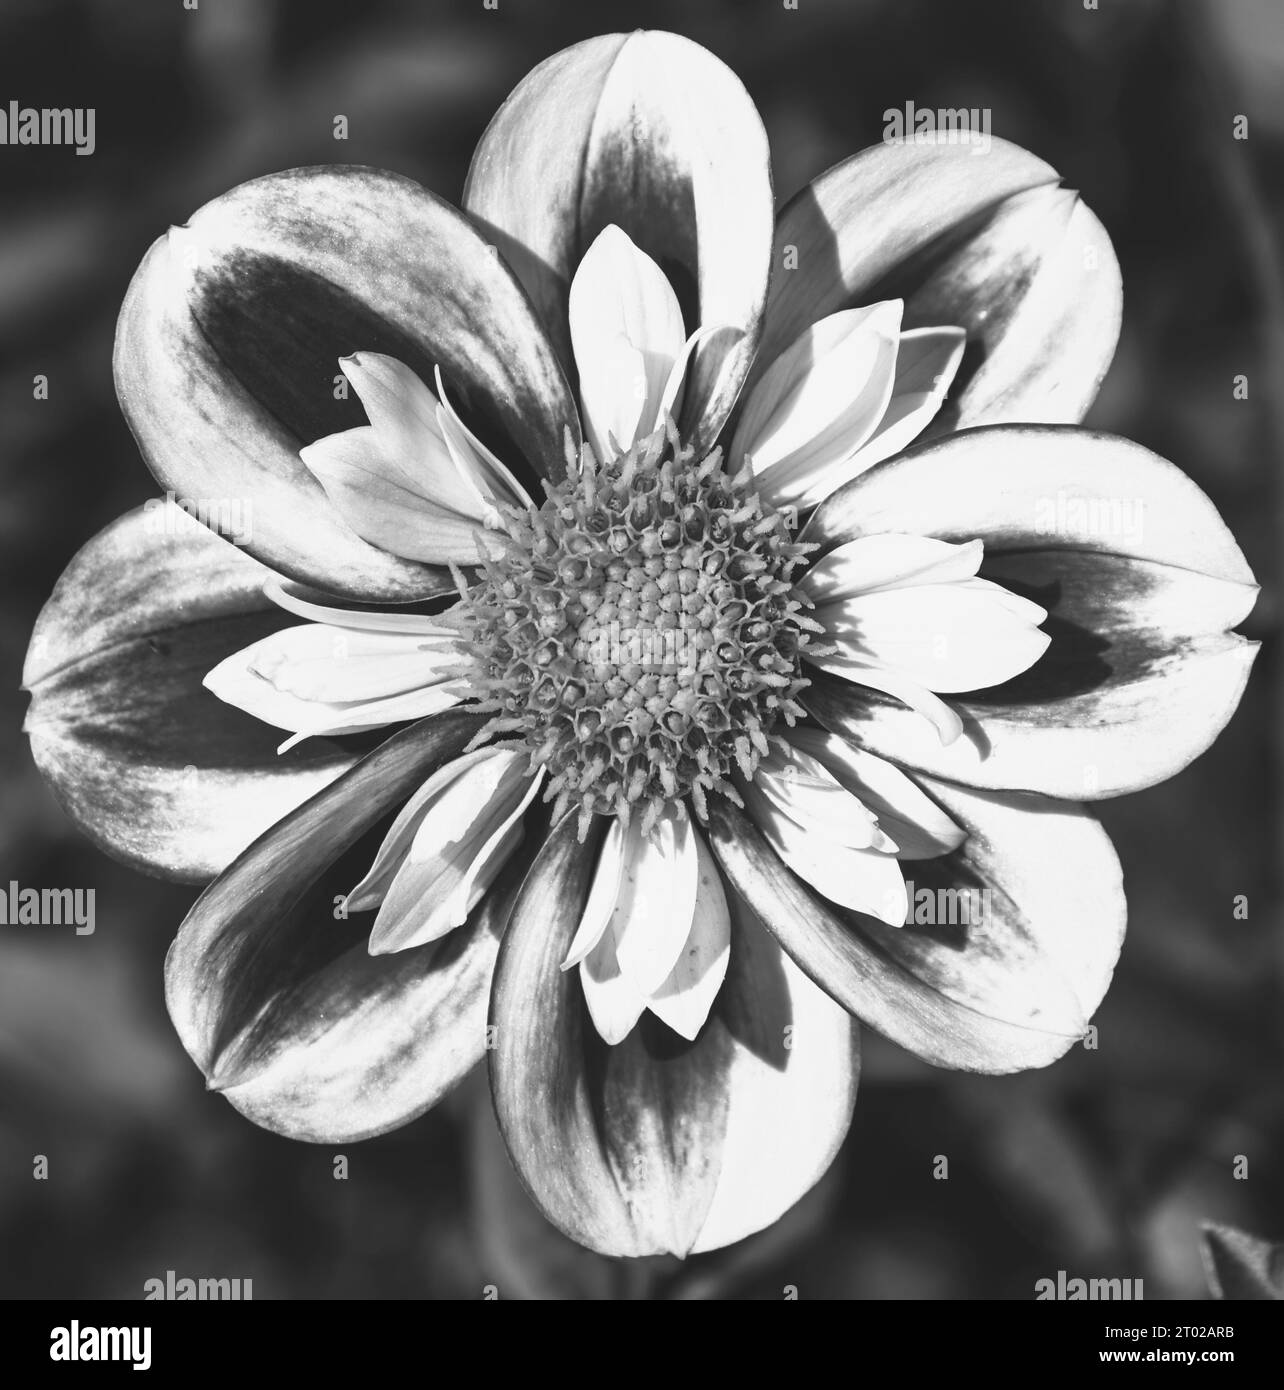 Dahlia flower  symmetric perfection. Closeup. Abstract floral art background. Black white photography. Stock Photo